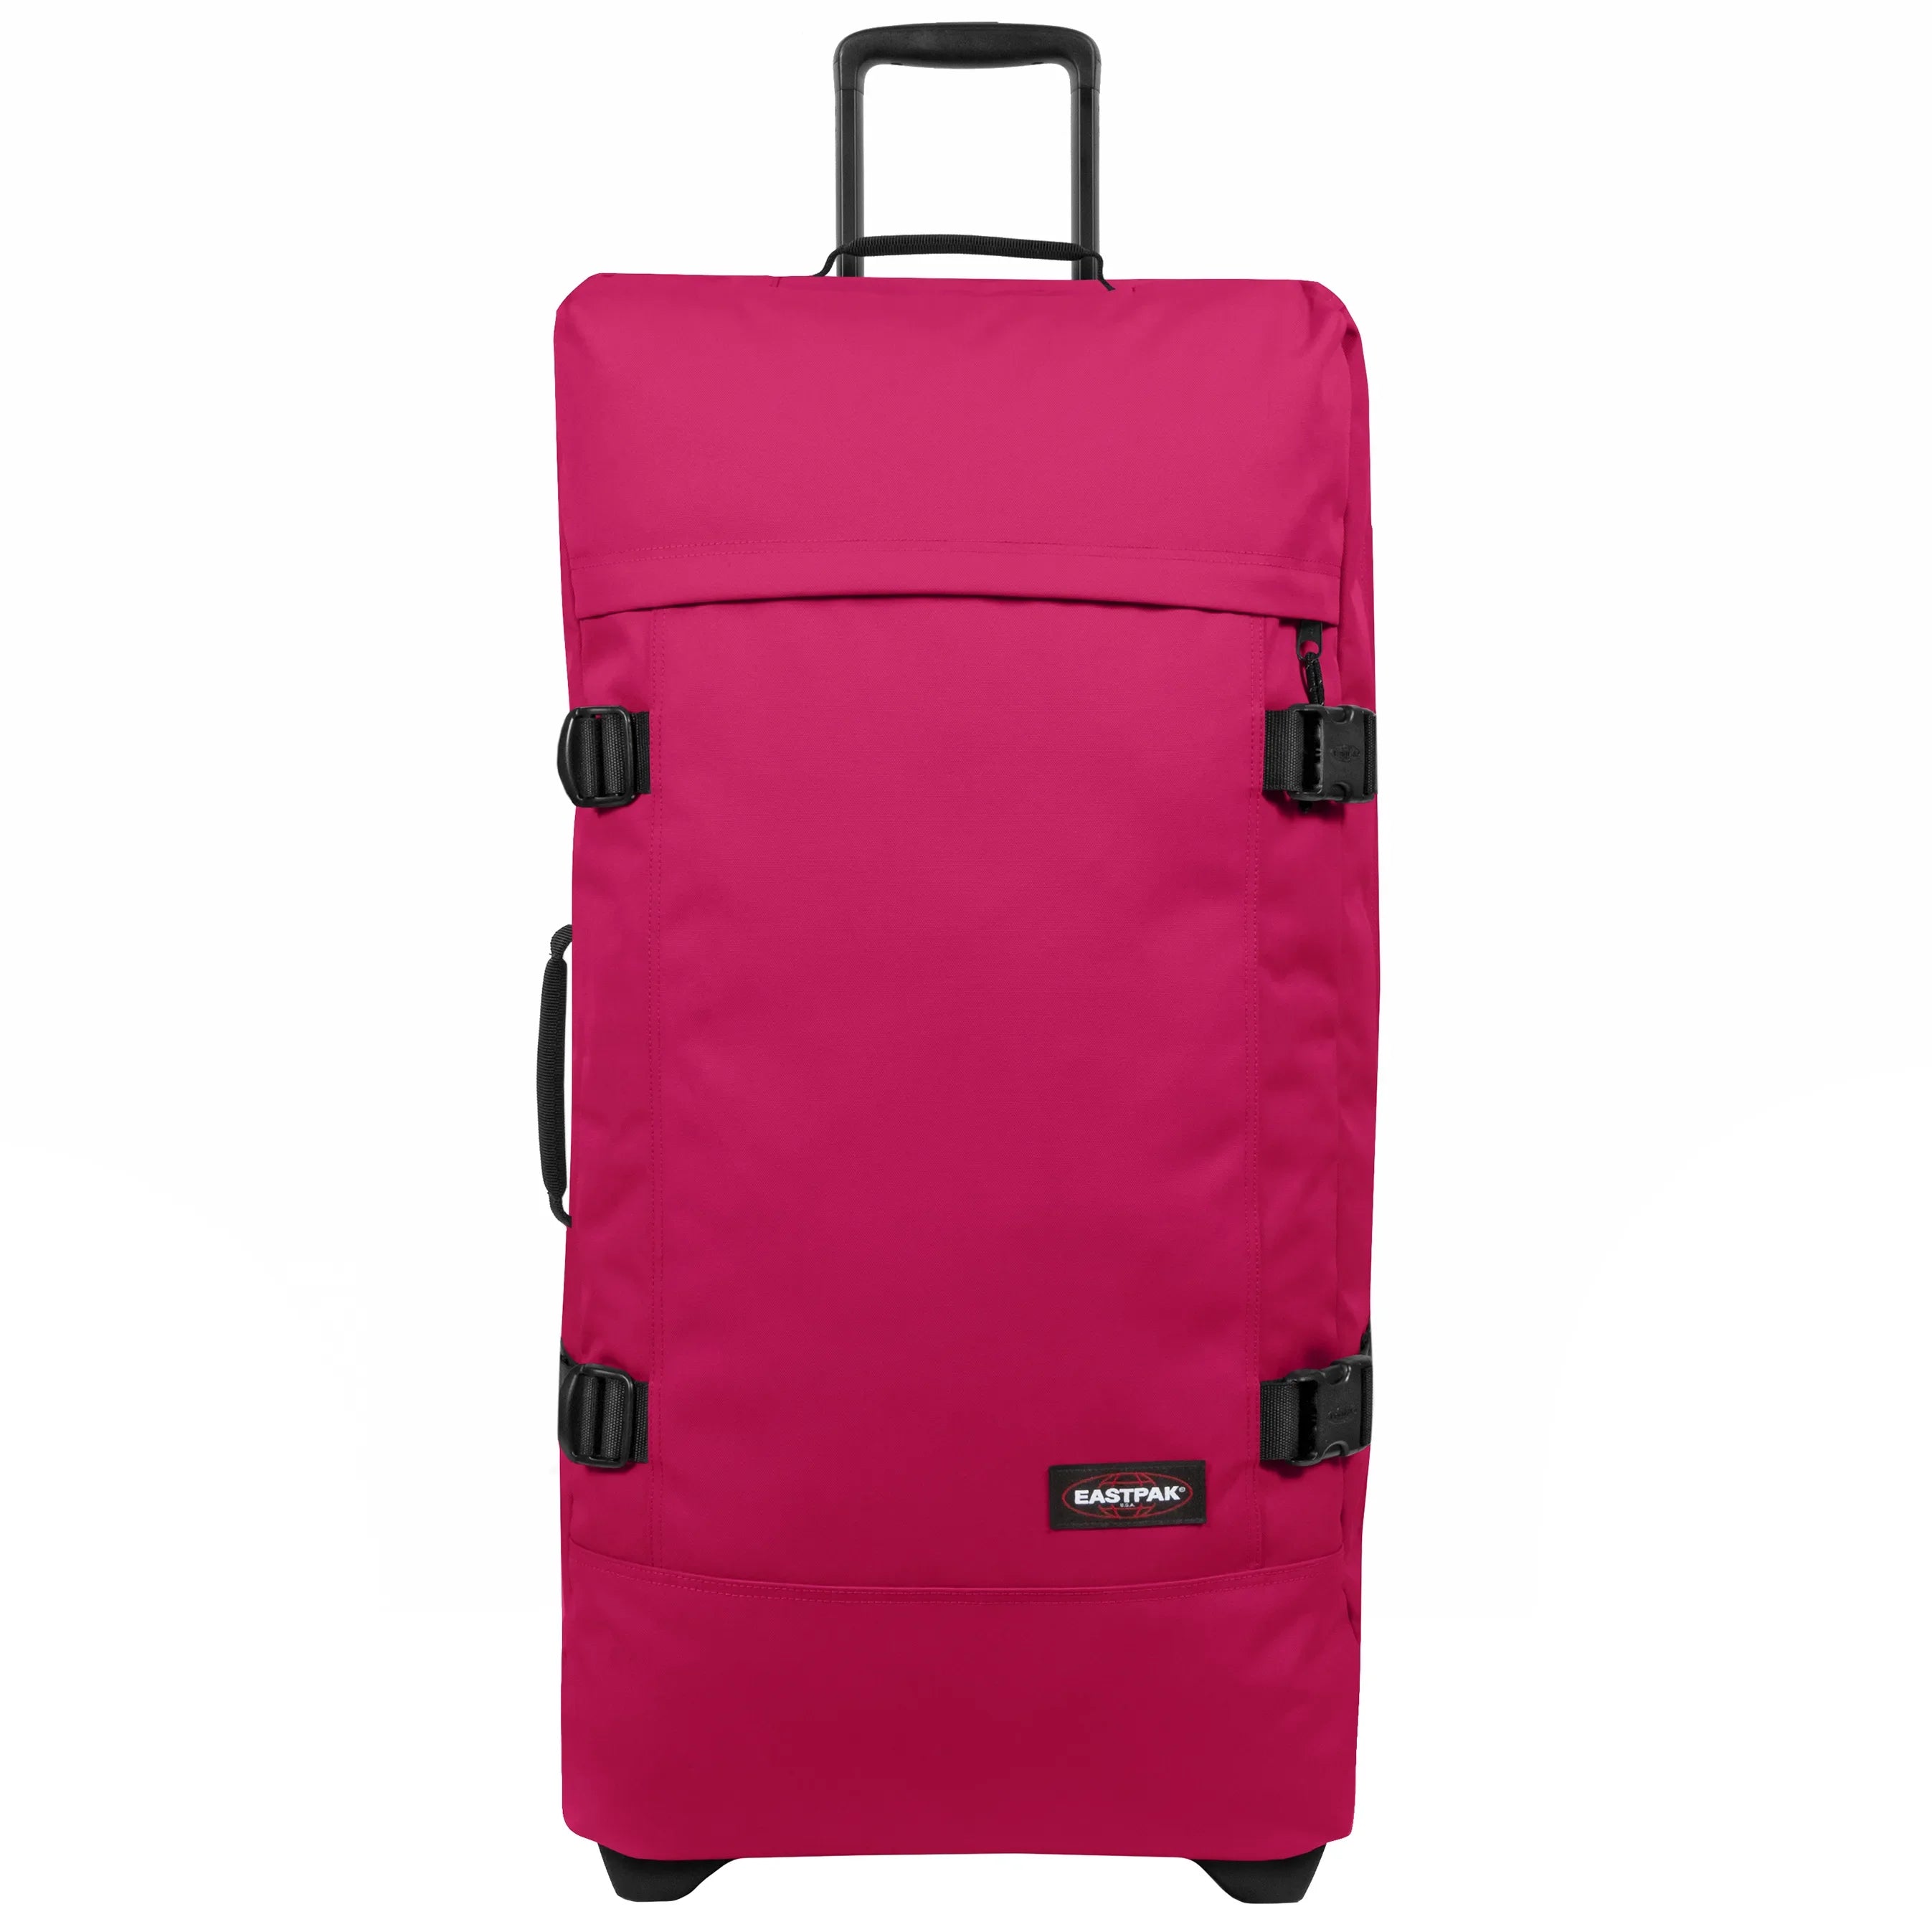 Eastpak Authentic Travel Tranverz 2-Rollen Trolley 79 cm - Ruby Pink